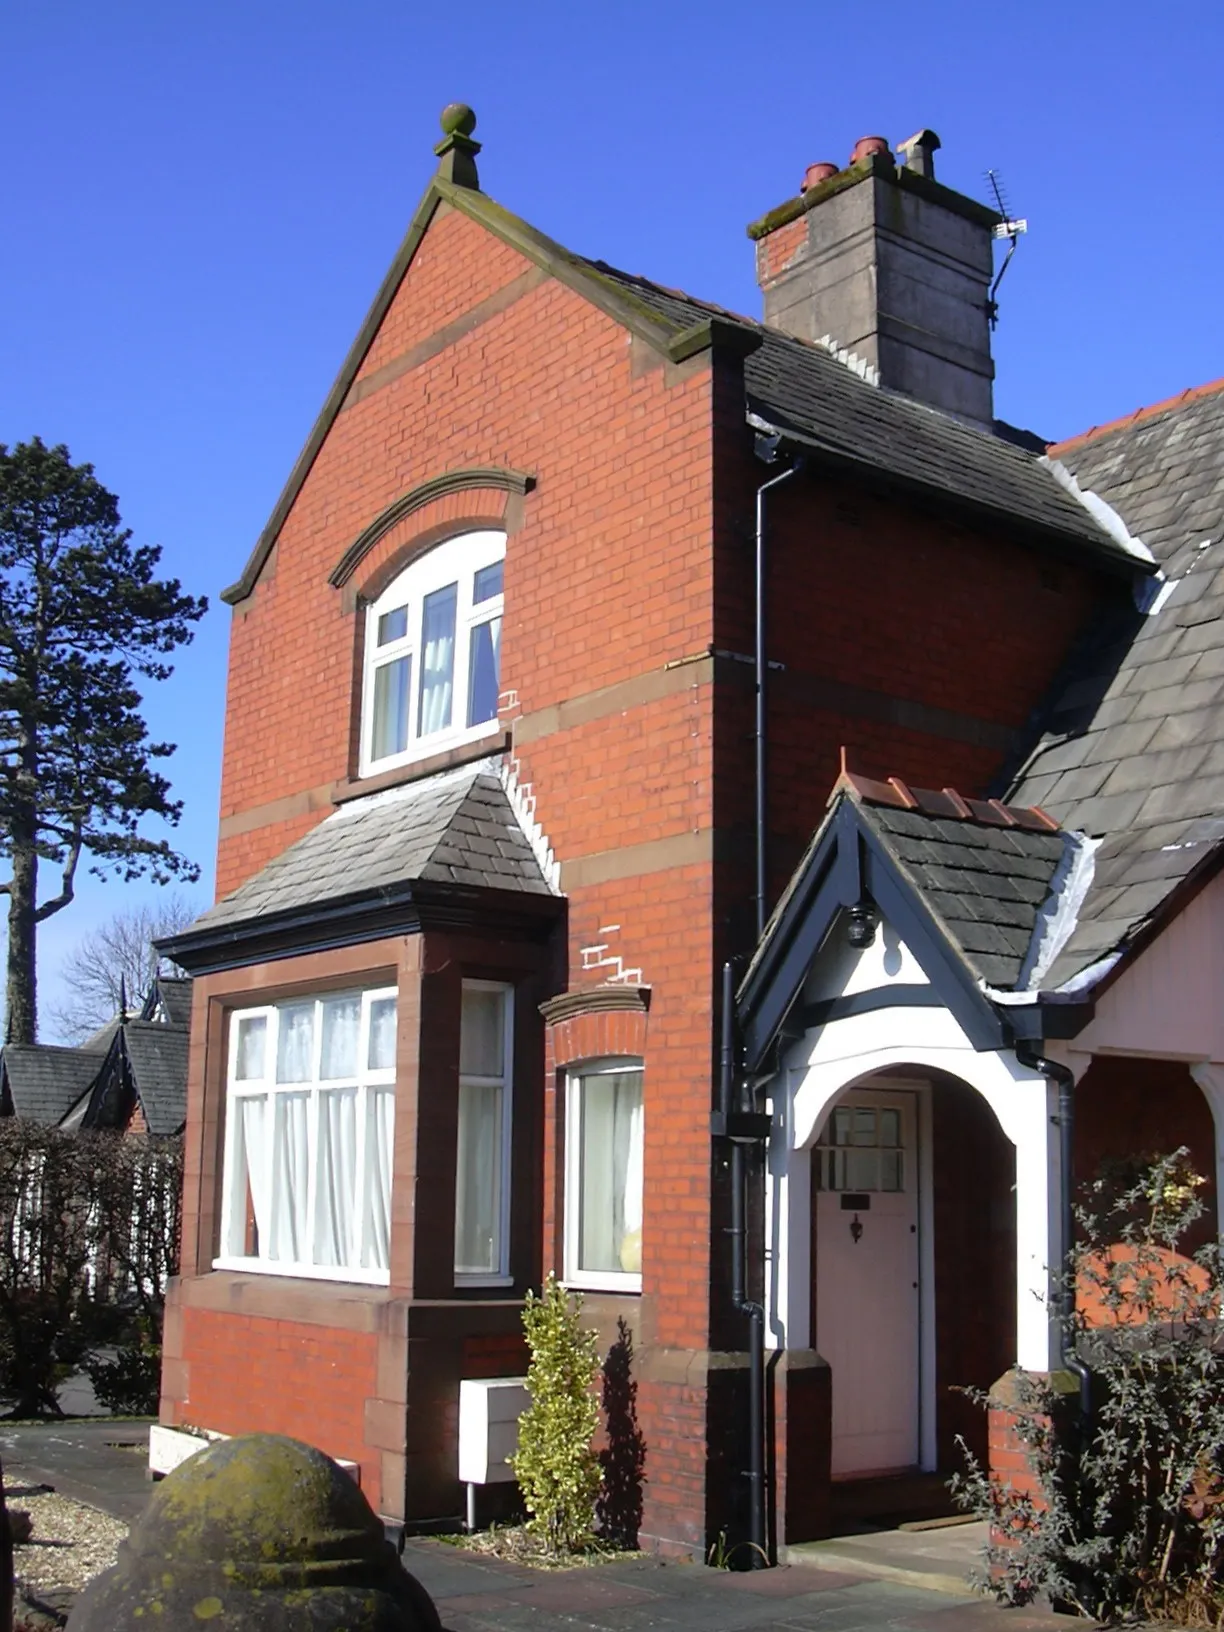 Photo showing: "The School House" Wrea Green, Lancashire